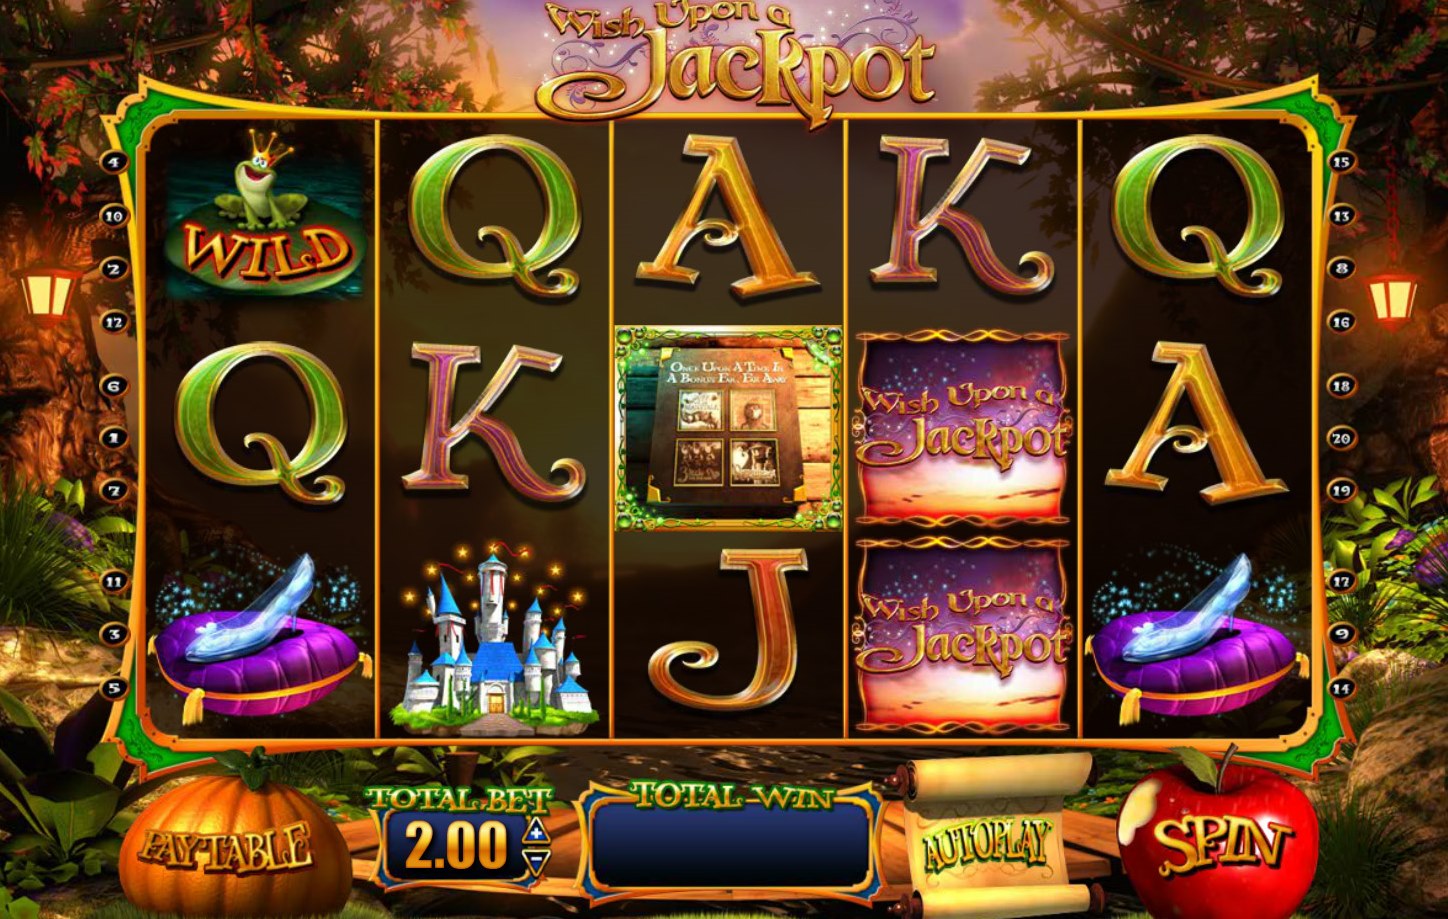 Online Casino Wish Upon A Jackpot